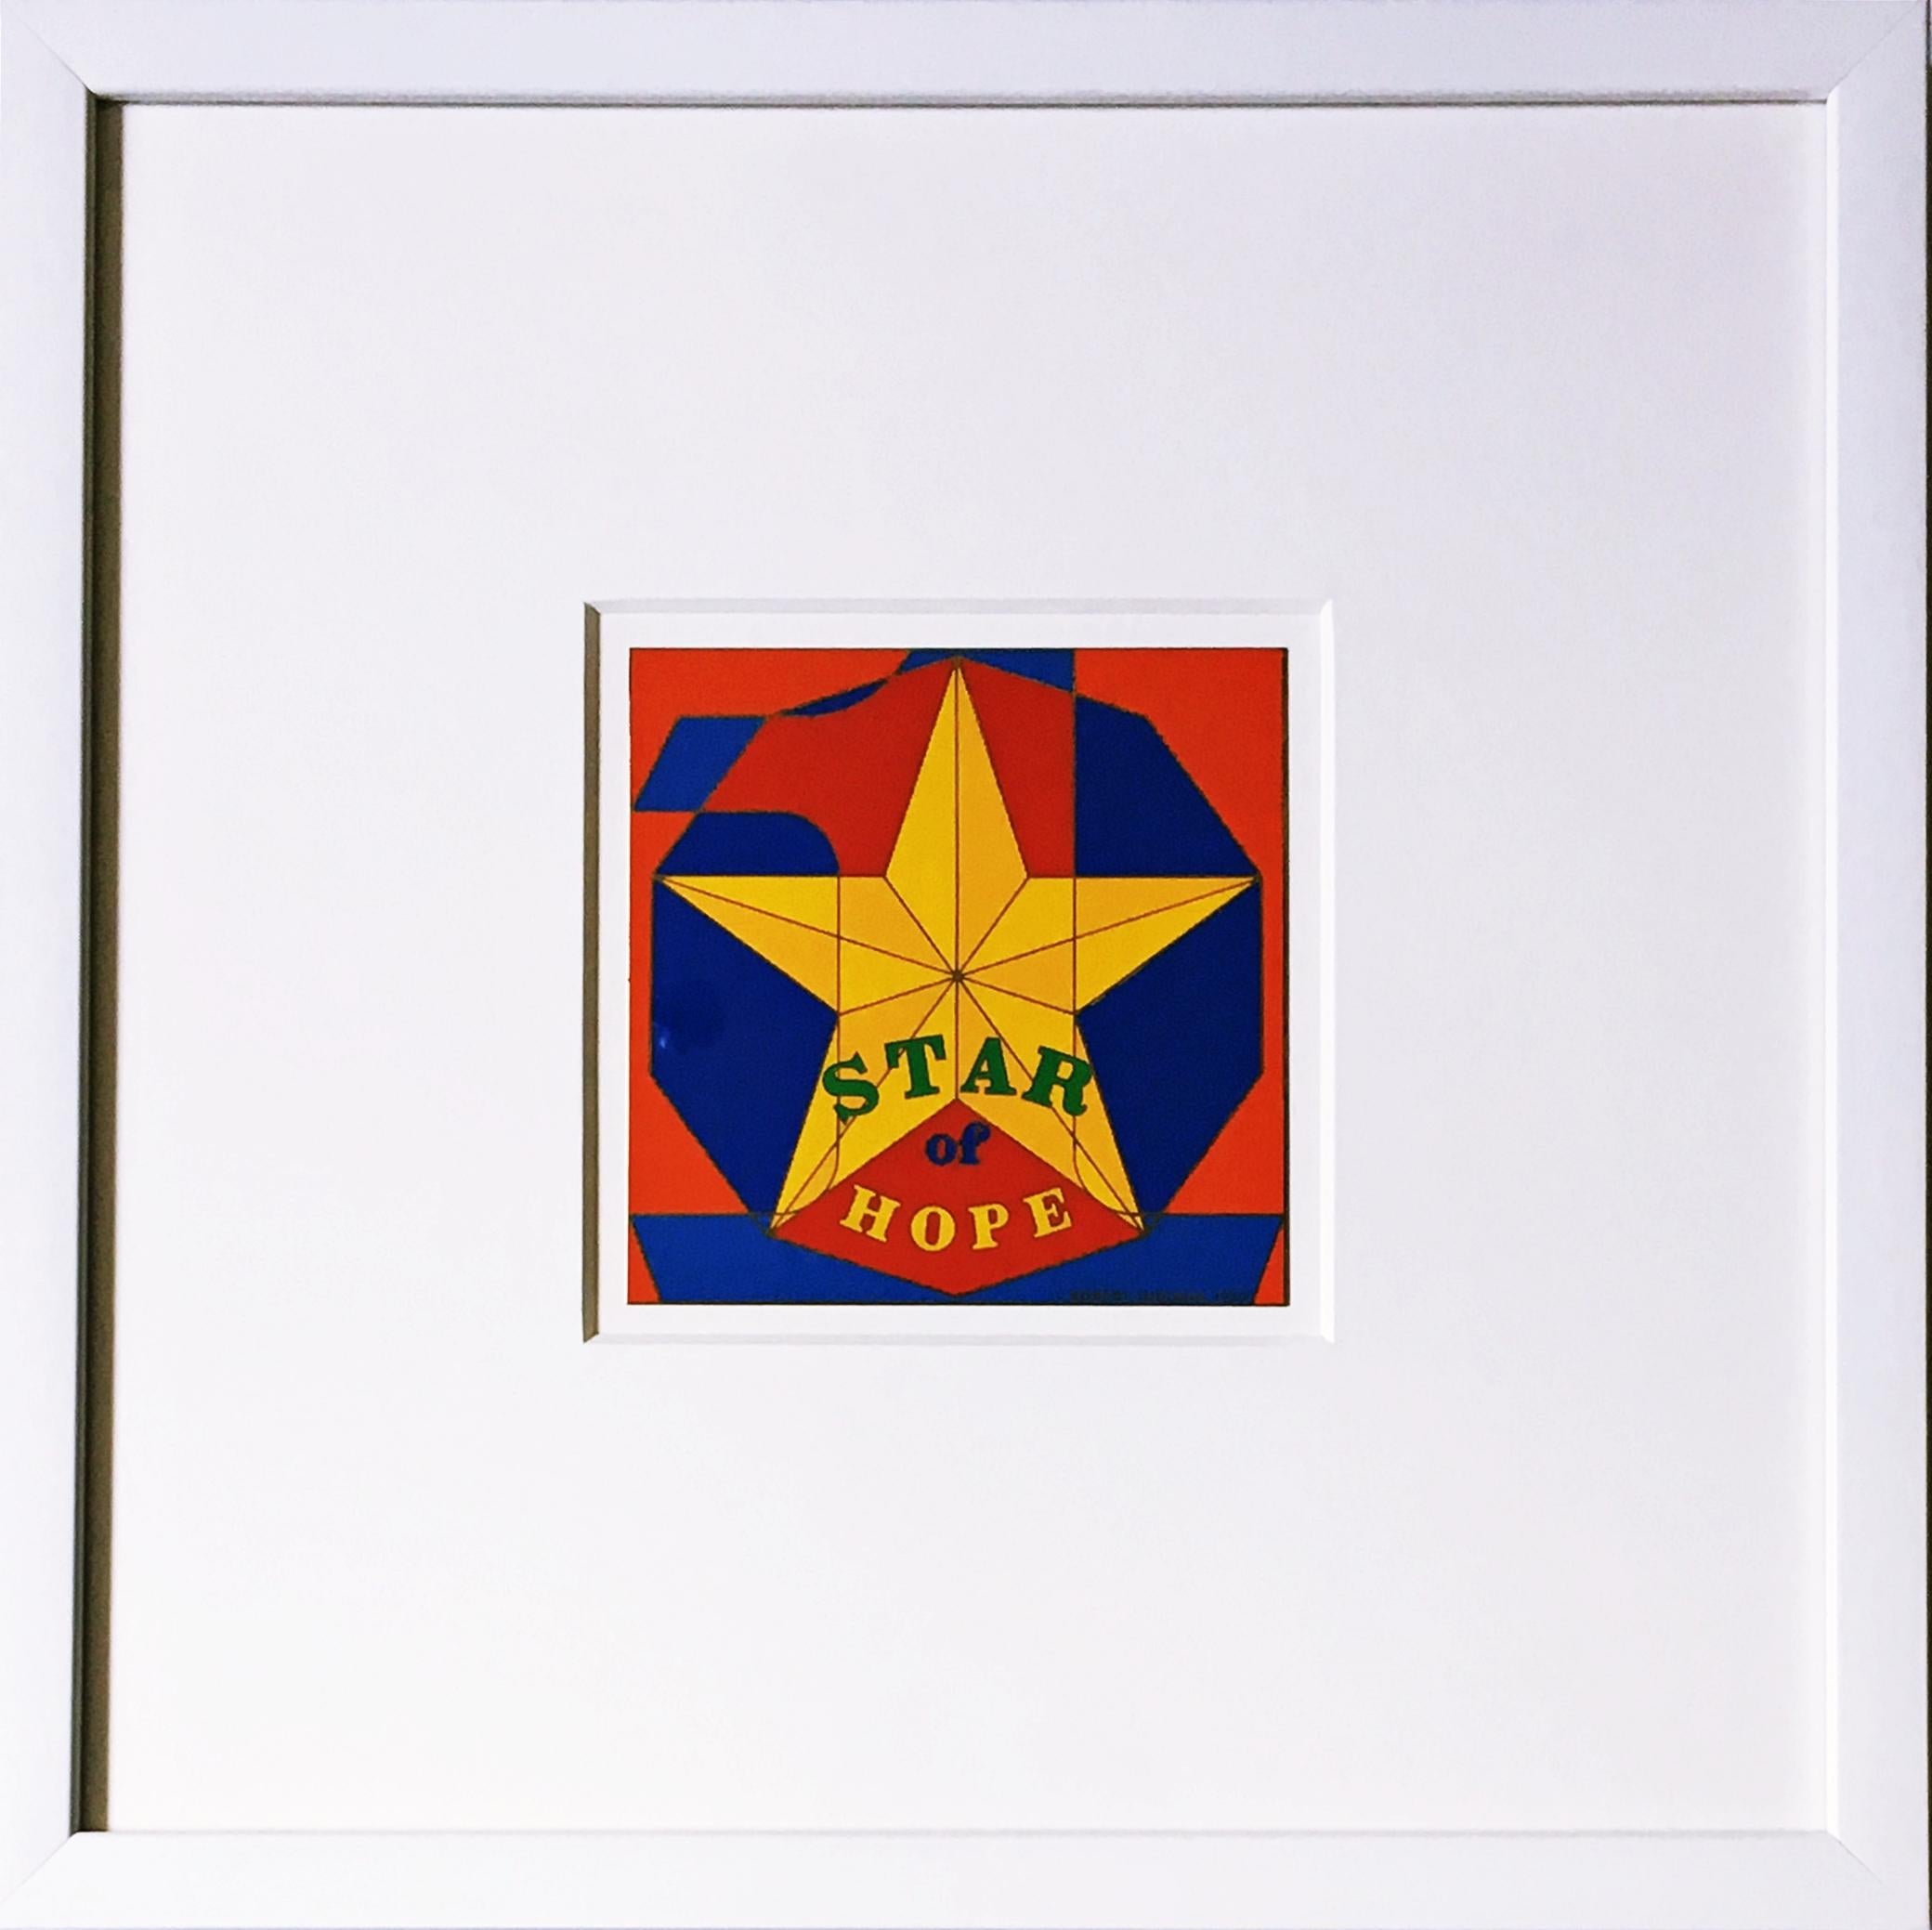 Star of Hope, émail sur plaque métallique avec nom et copyright estampillés, encadré - Pop Art Mixed Media Art par Robert Indiana